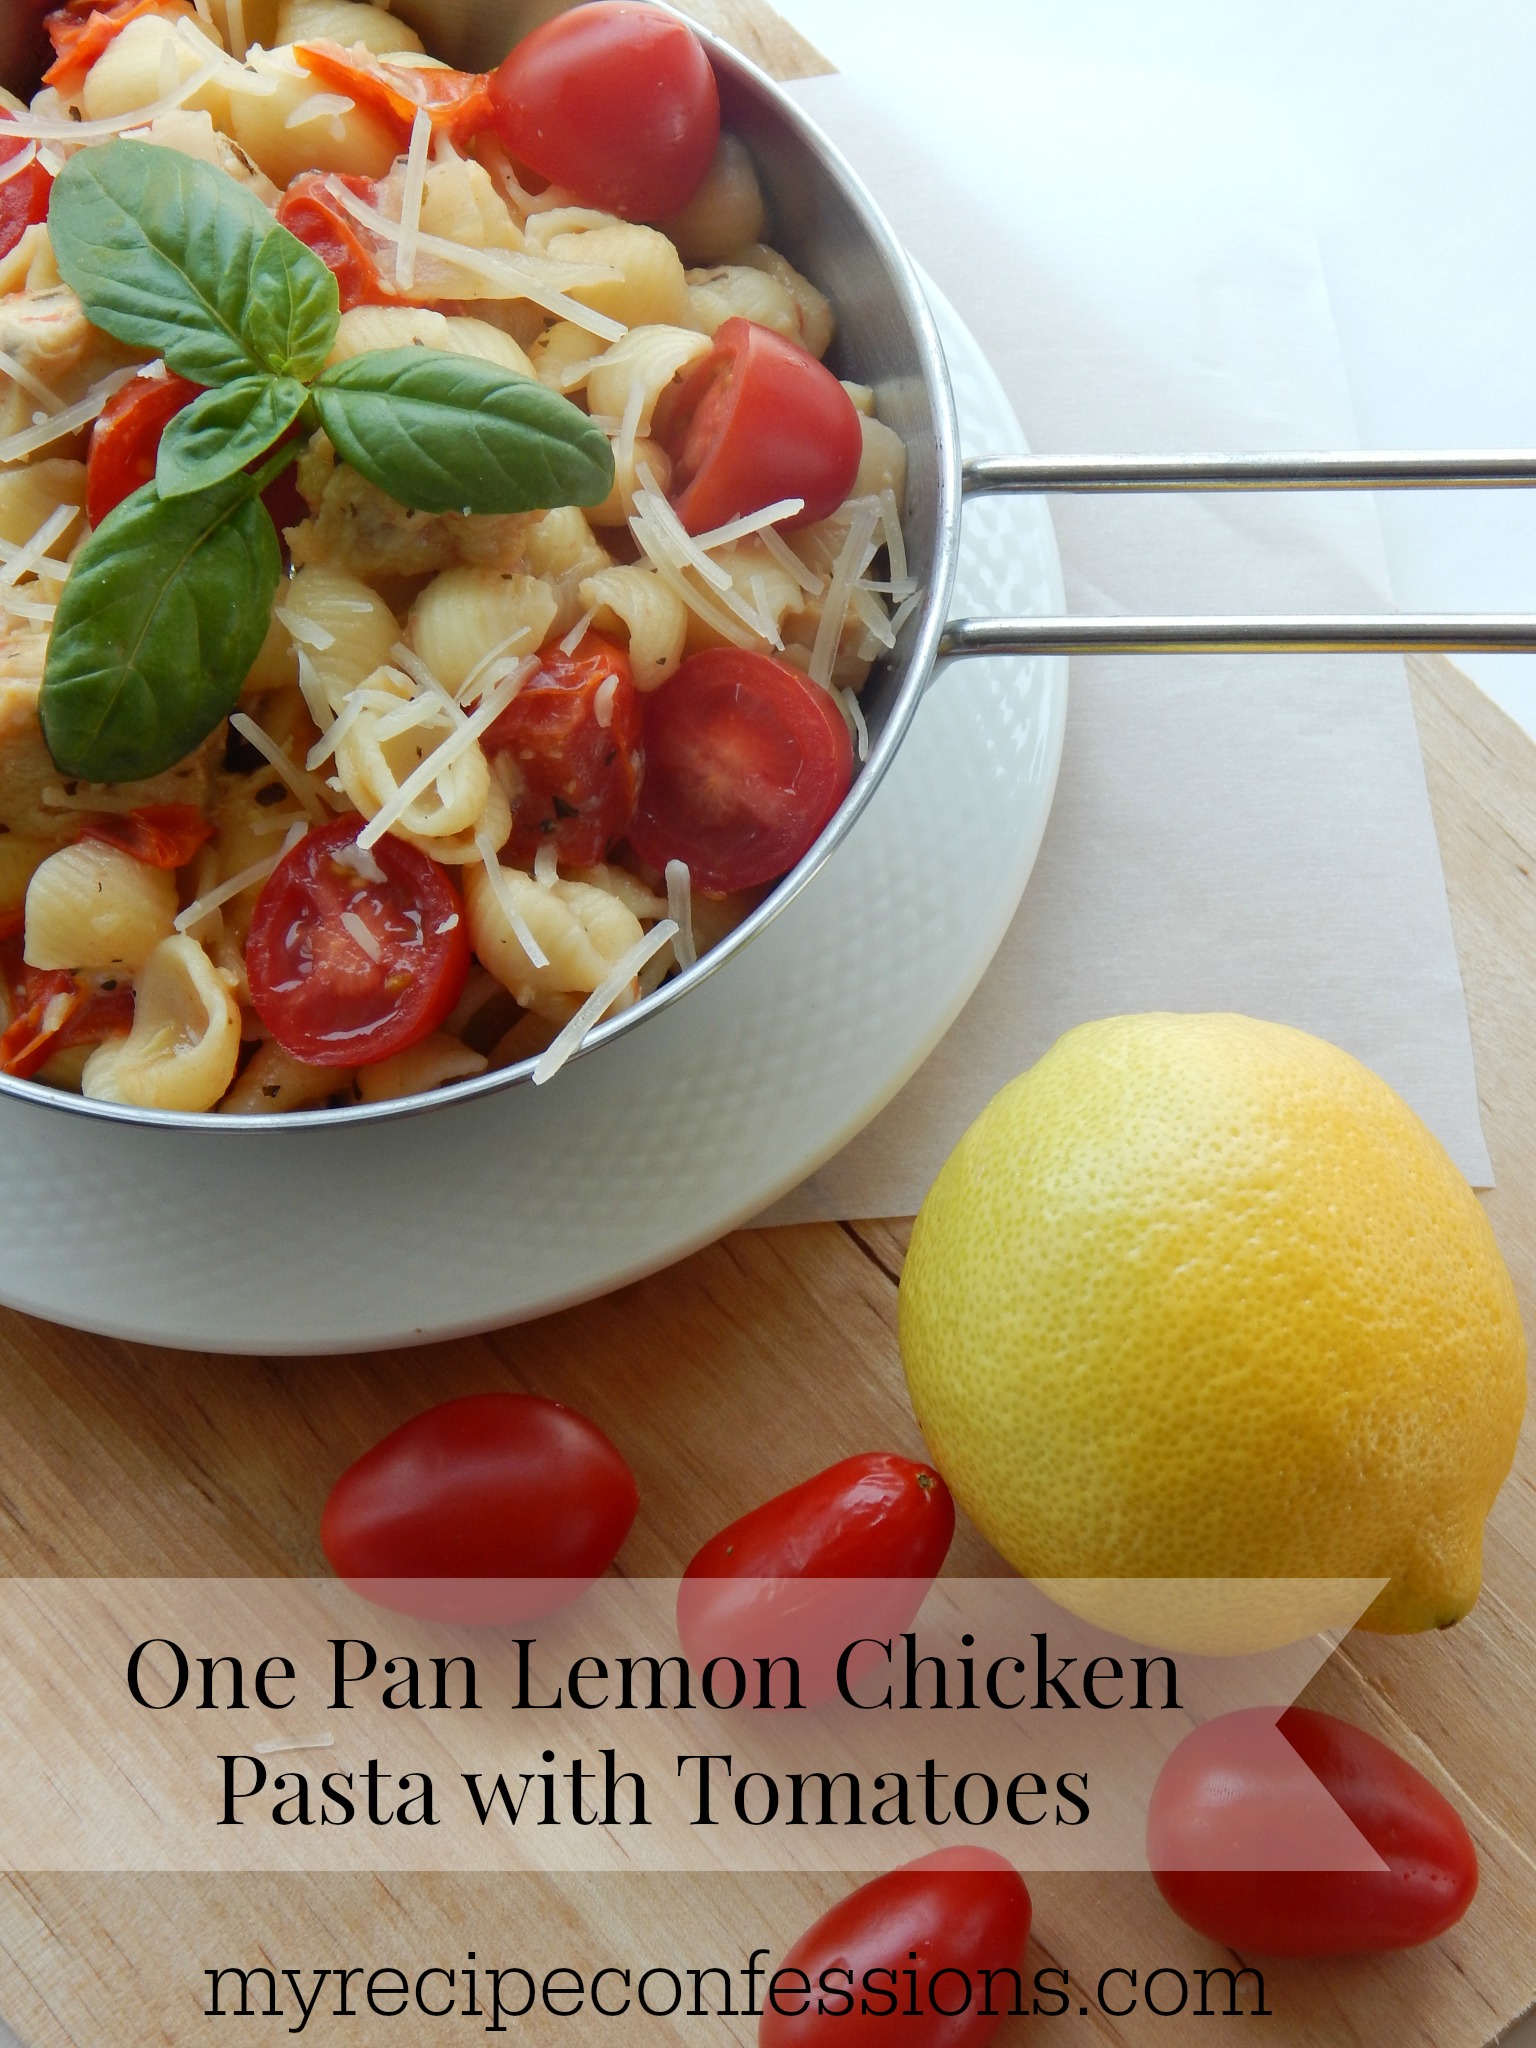 One pan lemon chicken pasta